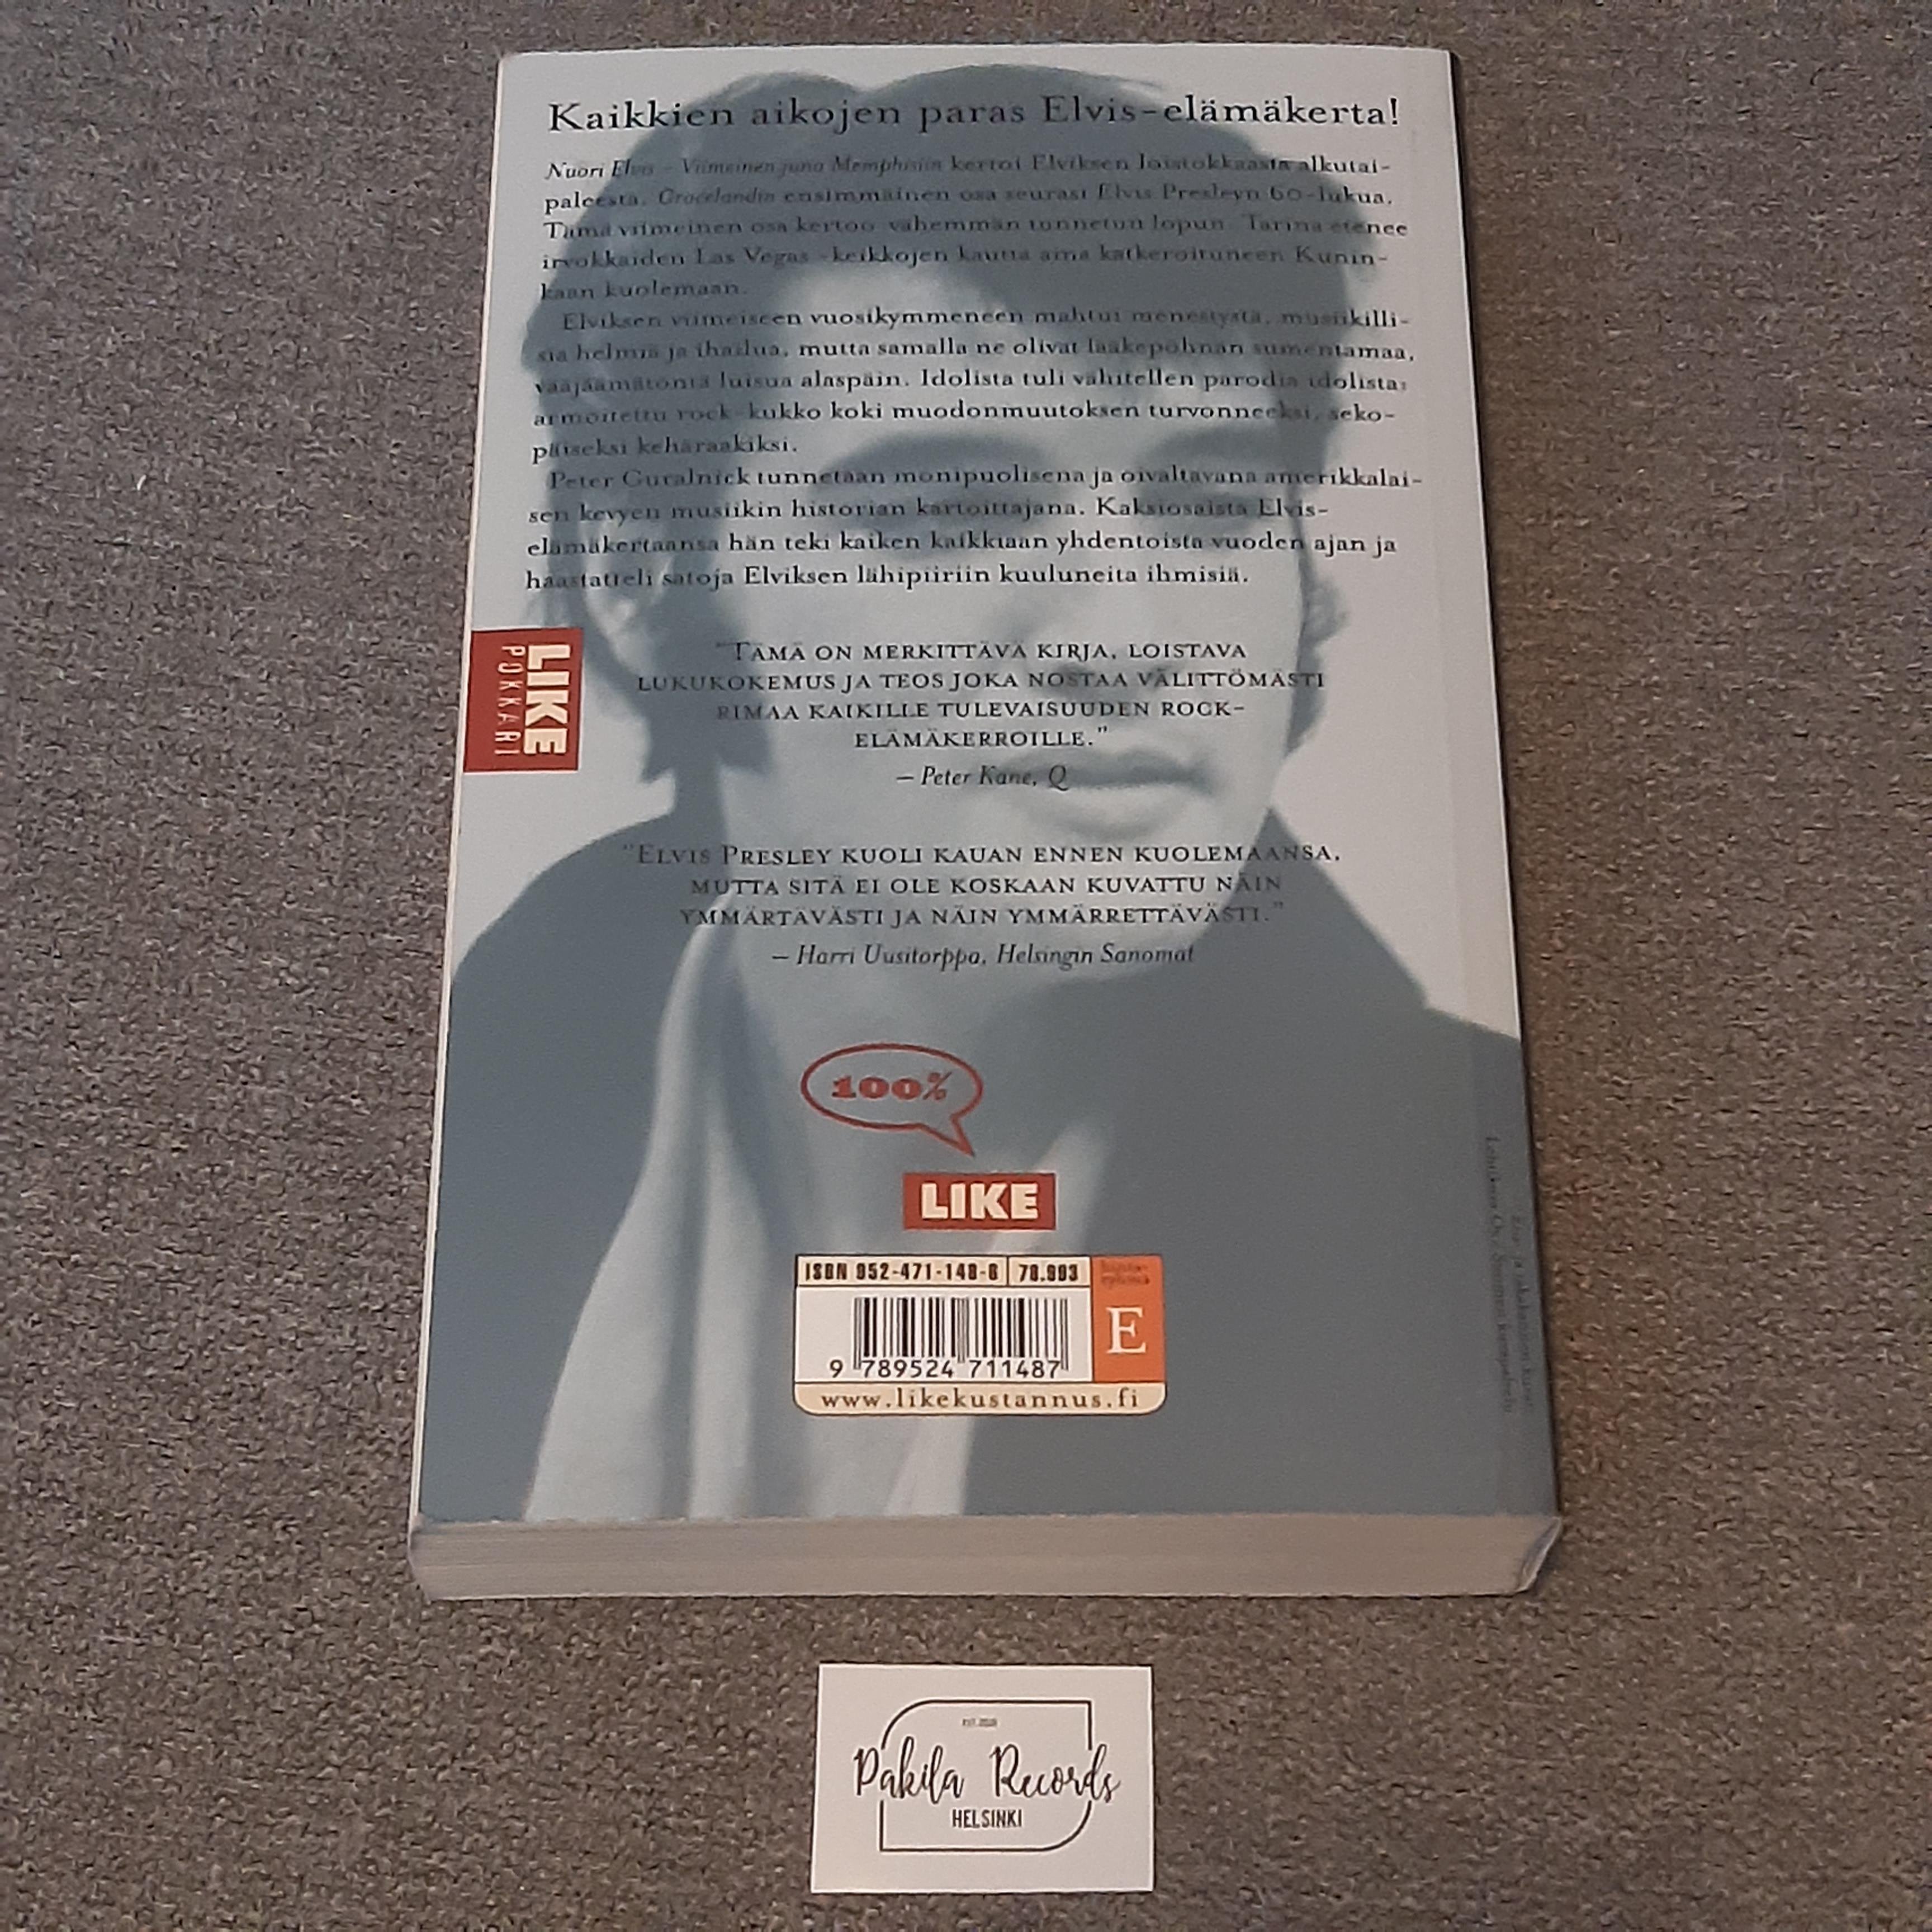 Elvis, Graceland 1969-1977 - Peter Guralnick - Kirja (käytetty)